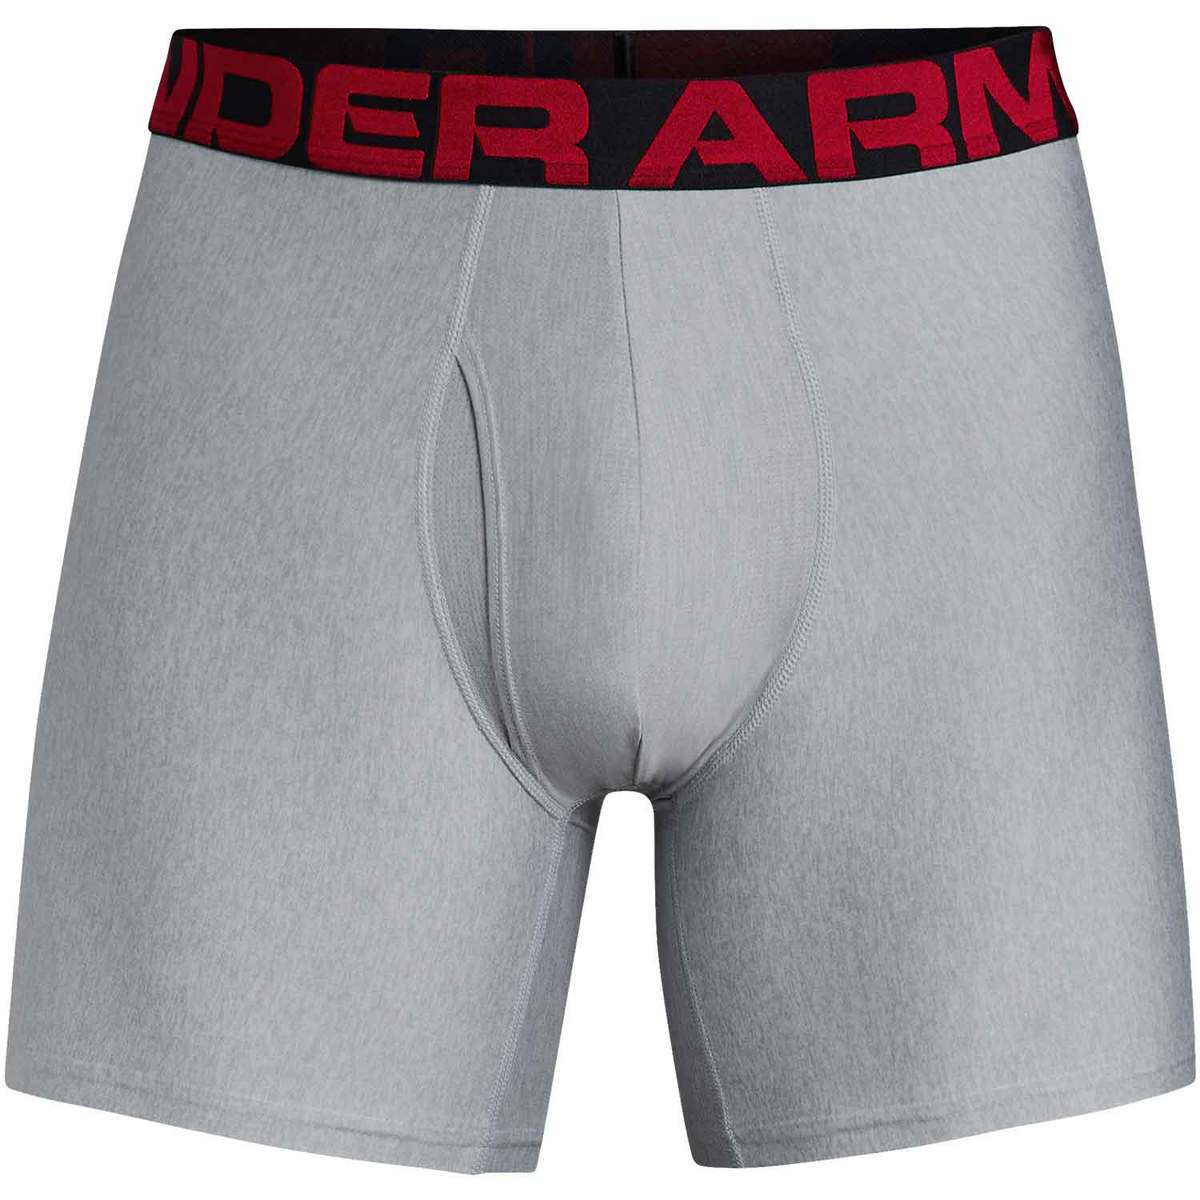 Under Armour Men's Tech 2-Pack Boxerjock Underwear - Gray - XL - Gray ...